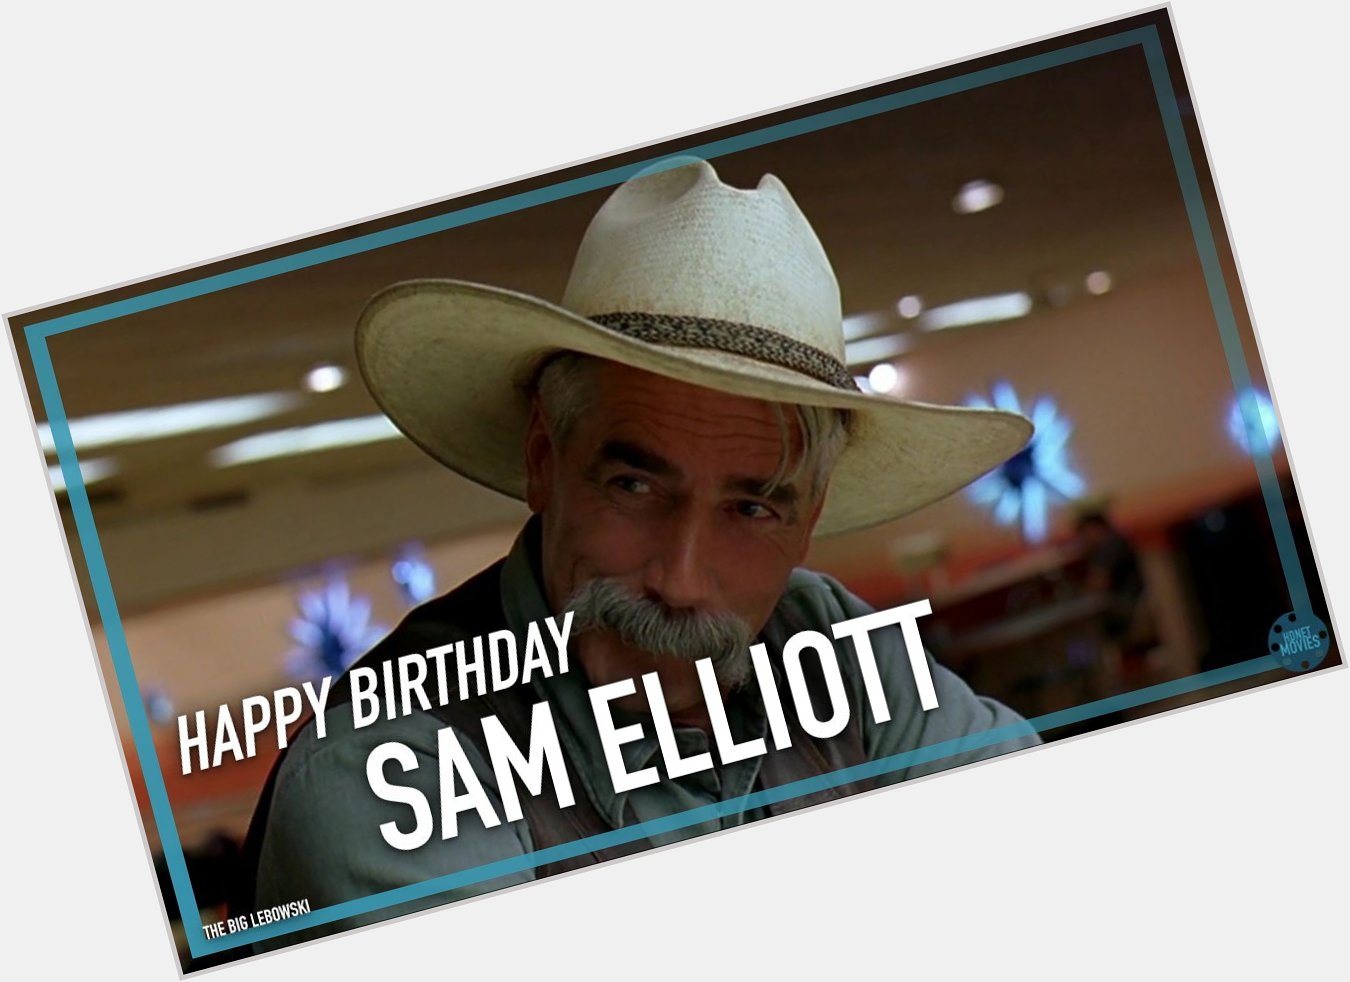 The Dude\s dude turns 73 today. Happy Birthday Sam Elliott! 